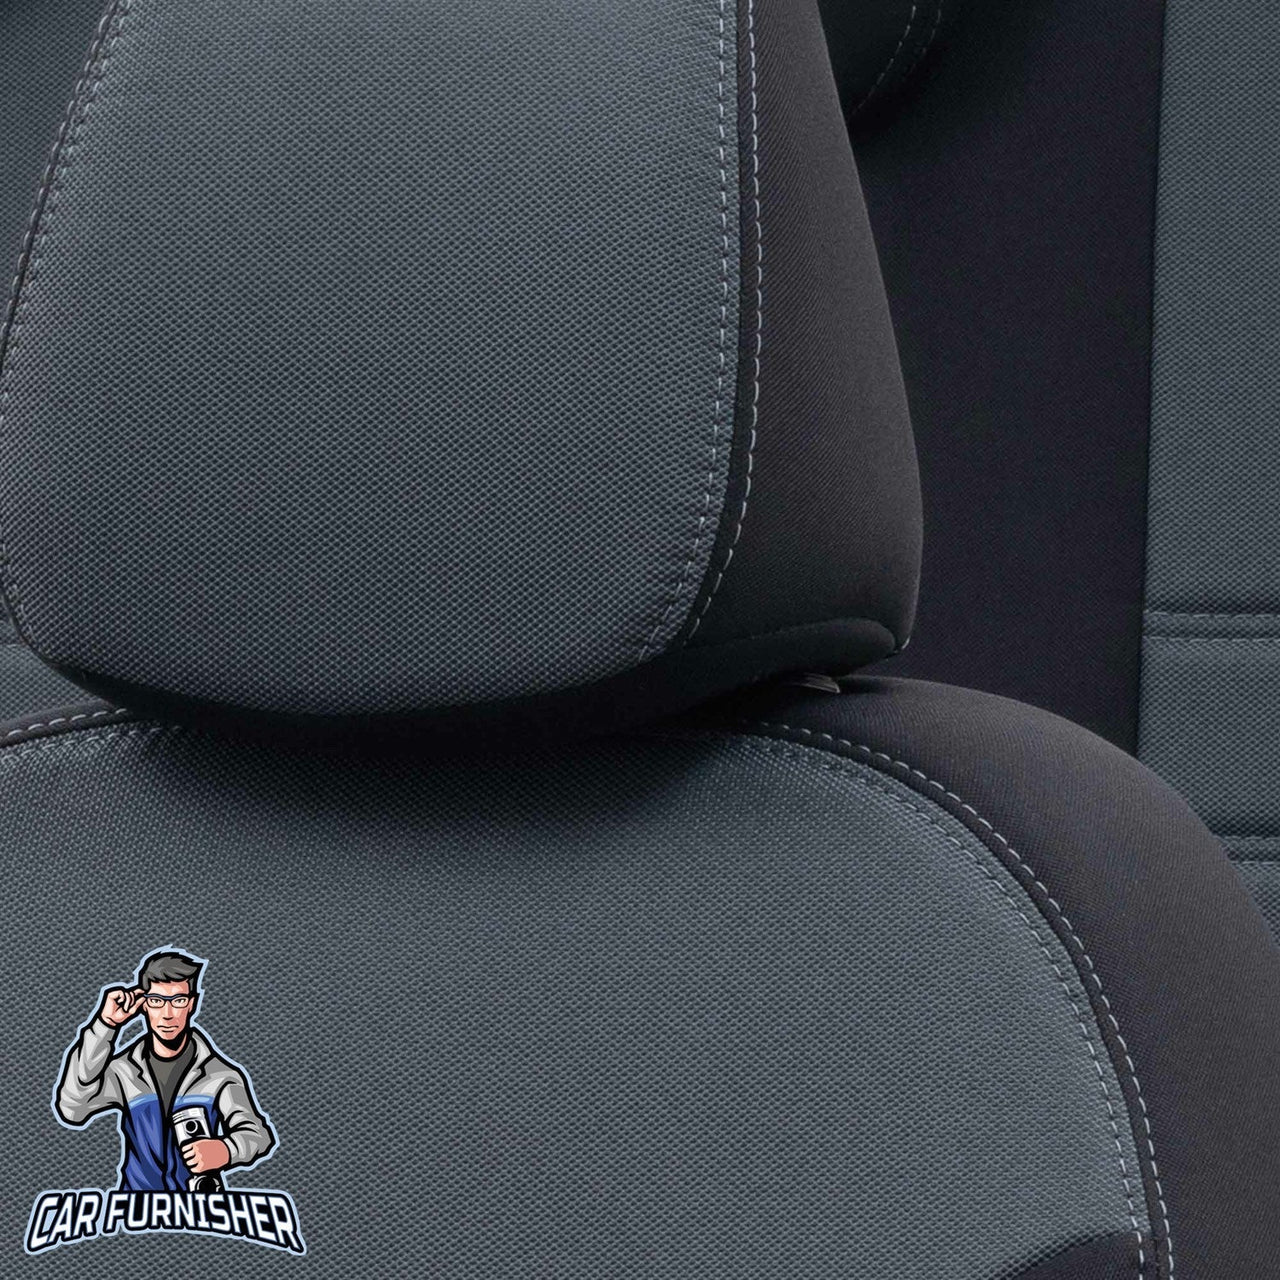 Chevrolet Spark Seat Covers Original Jacquard Design Smoked Black Jacquard Fabric